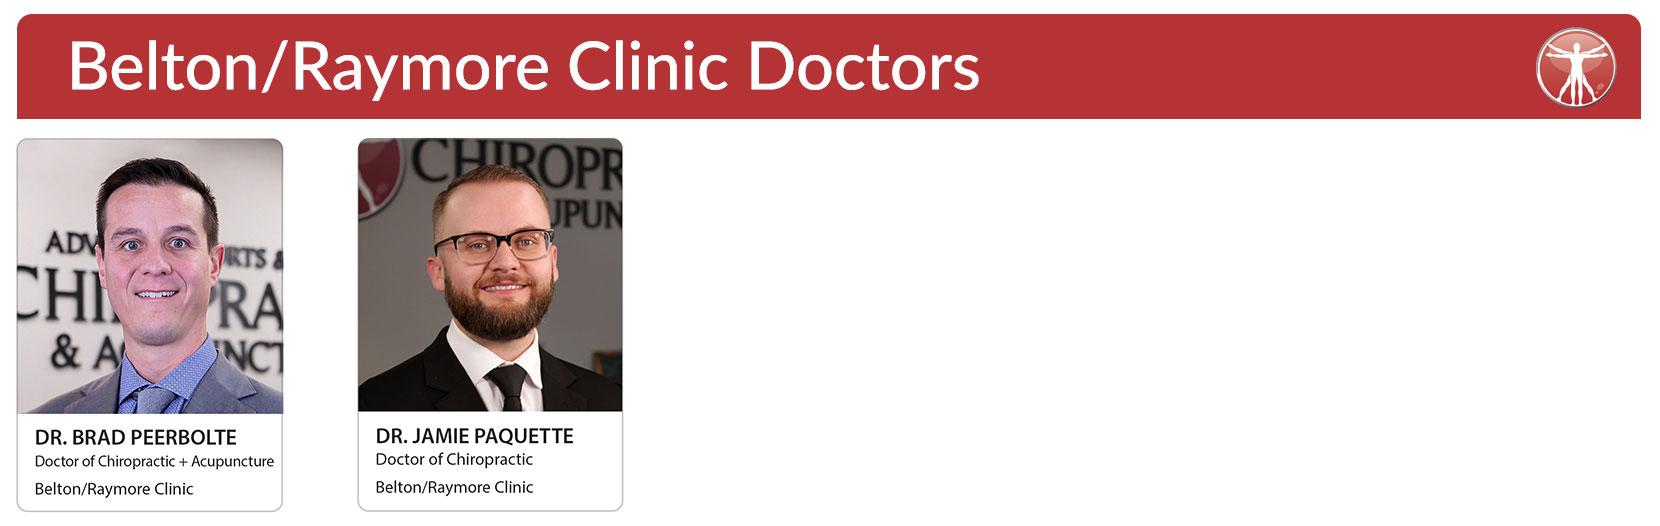 Belton Raymore Clinic Doctors